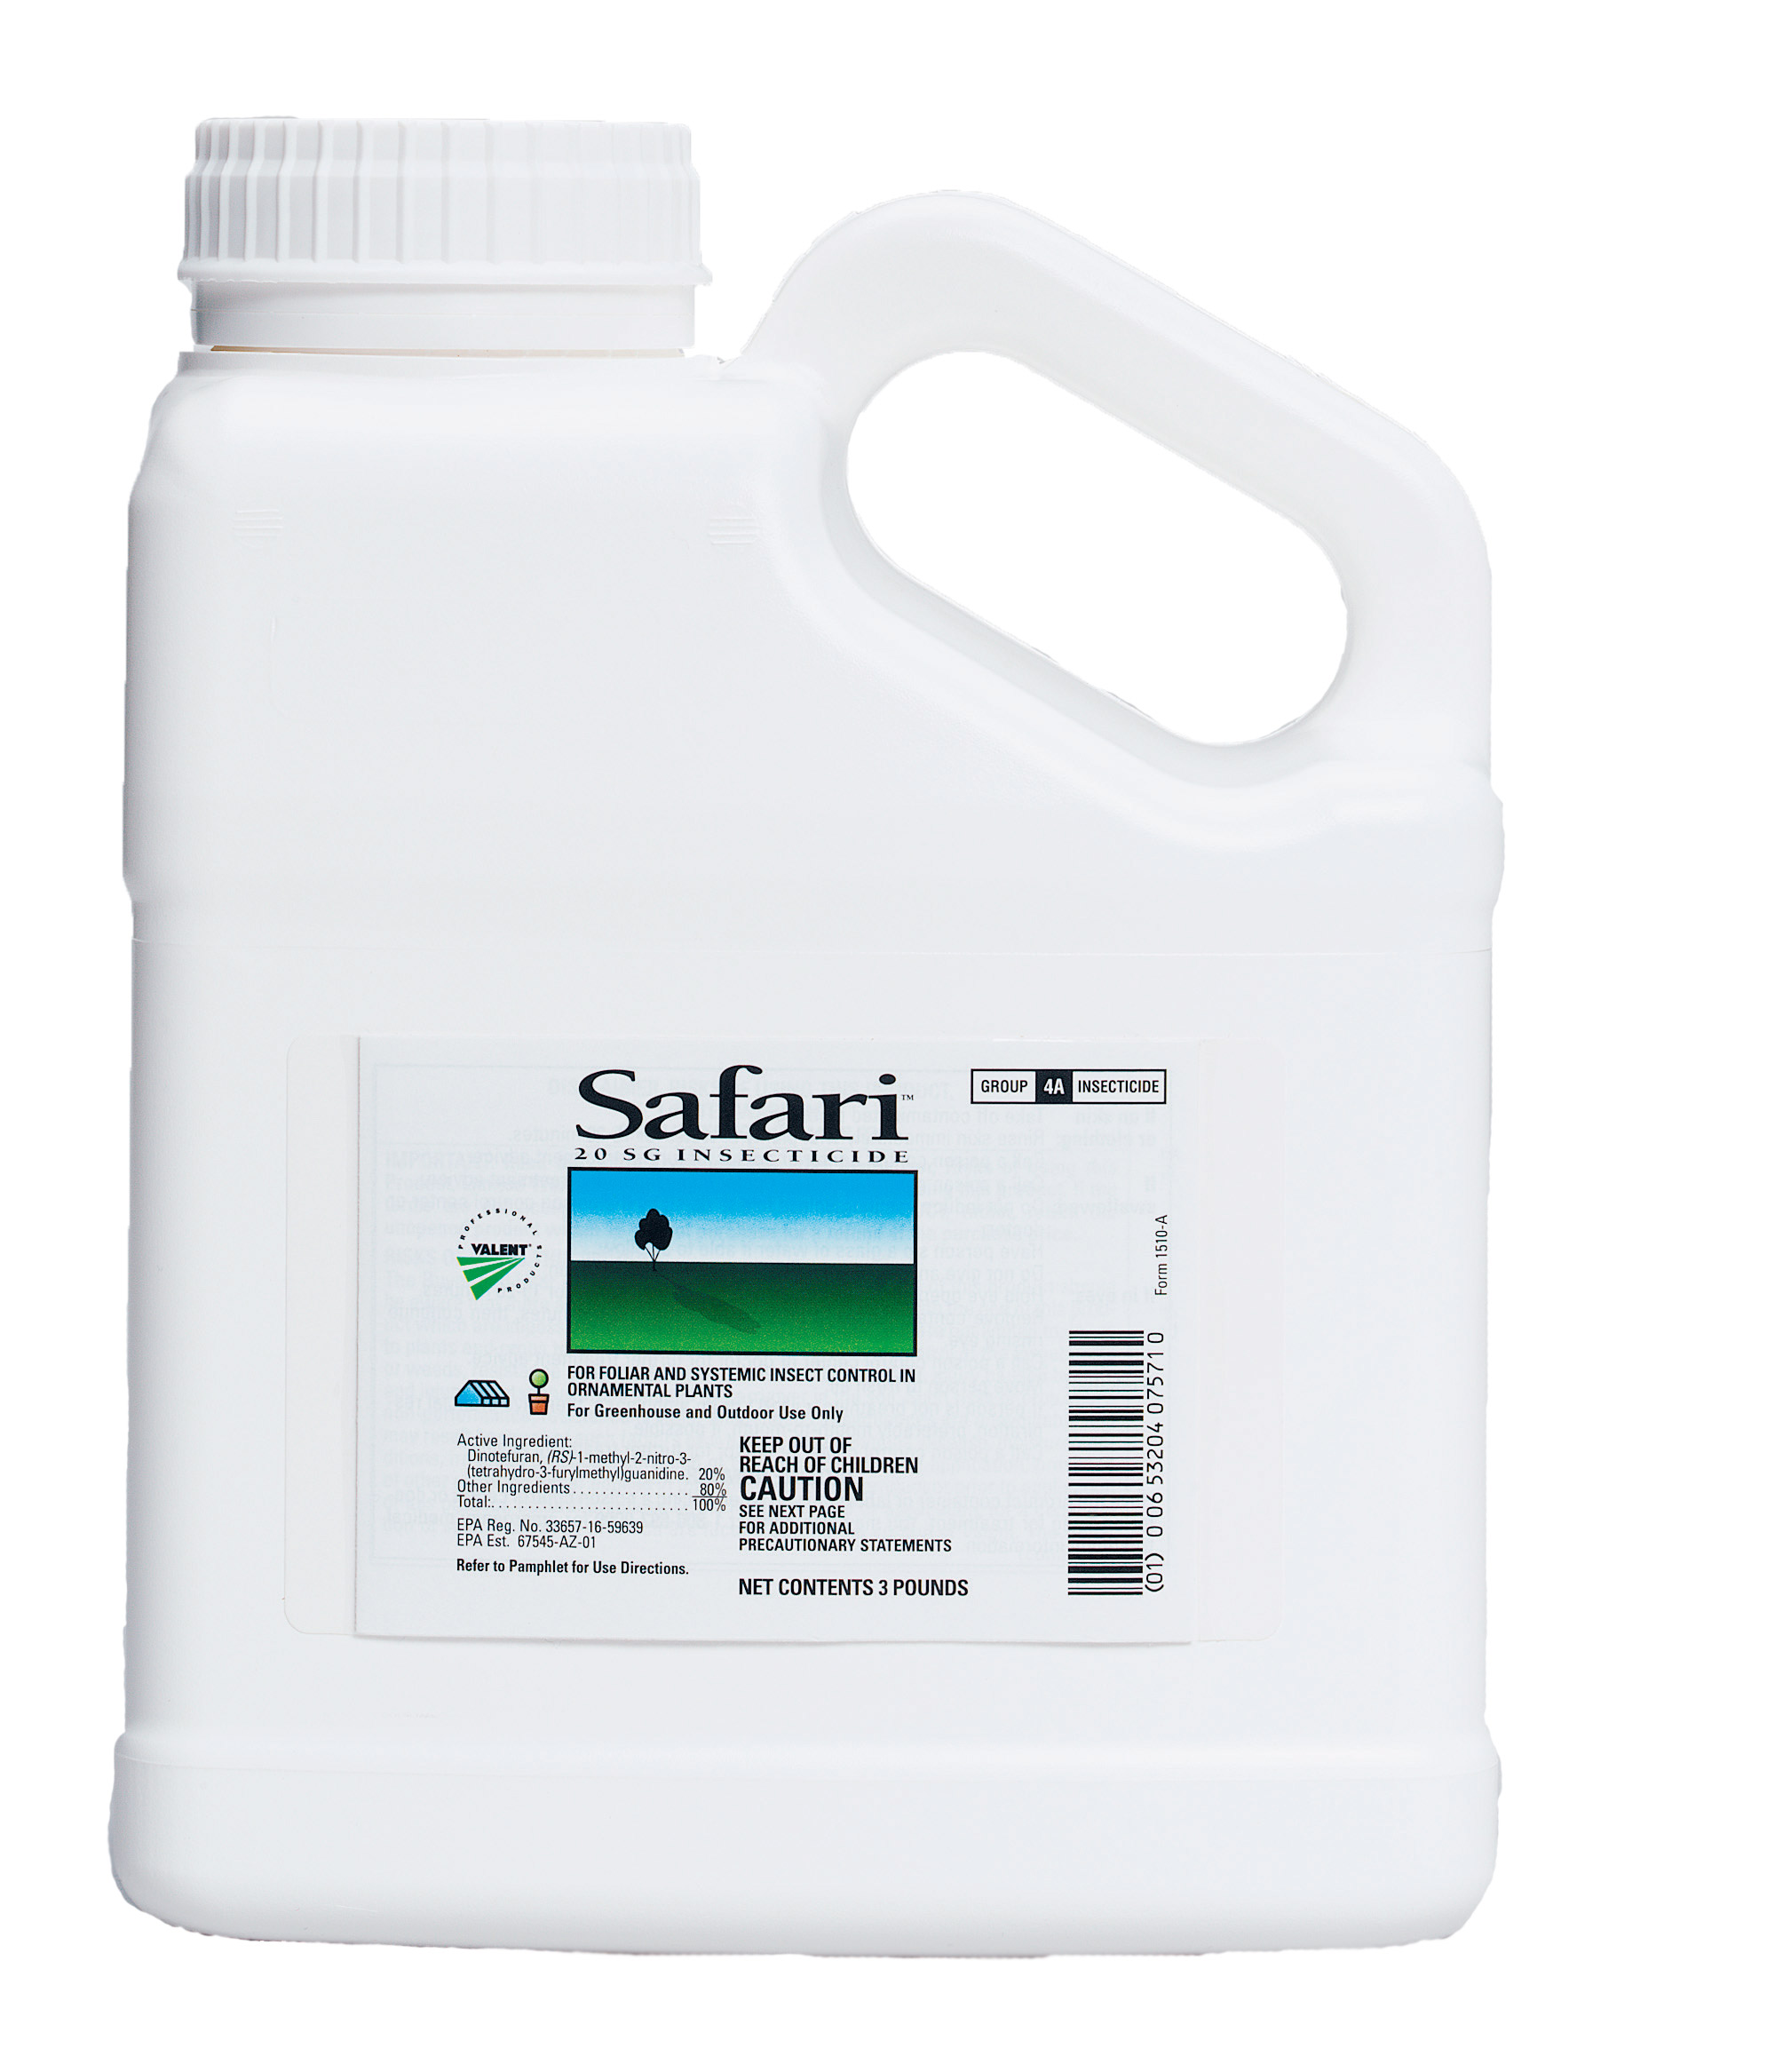 Safari 20 SG Insecticide 3 lb Bottle - 4 per case - Insecticides